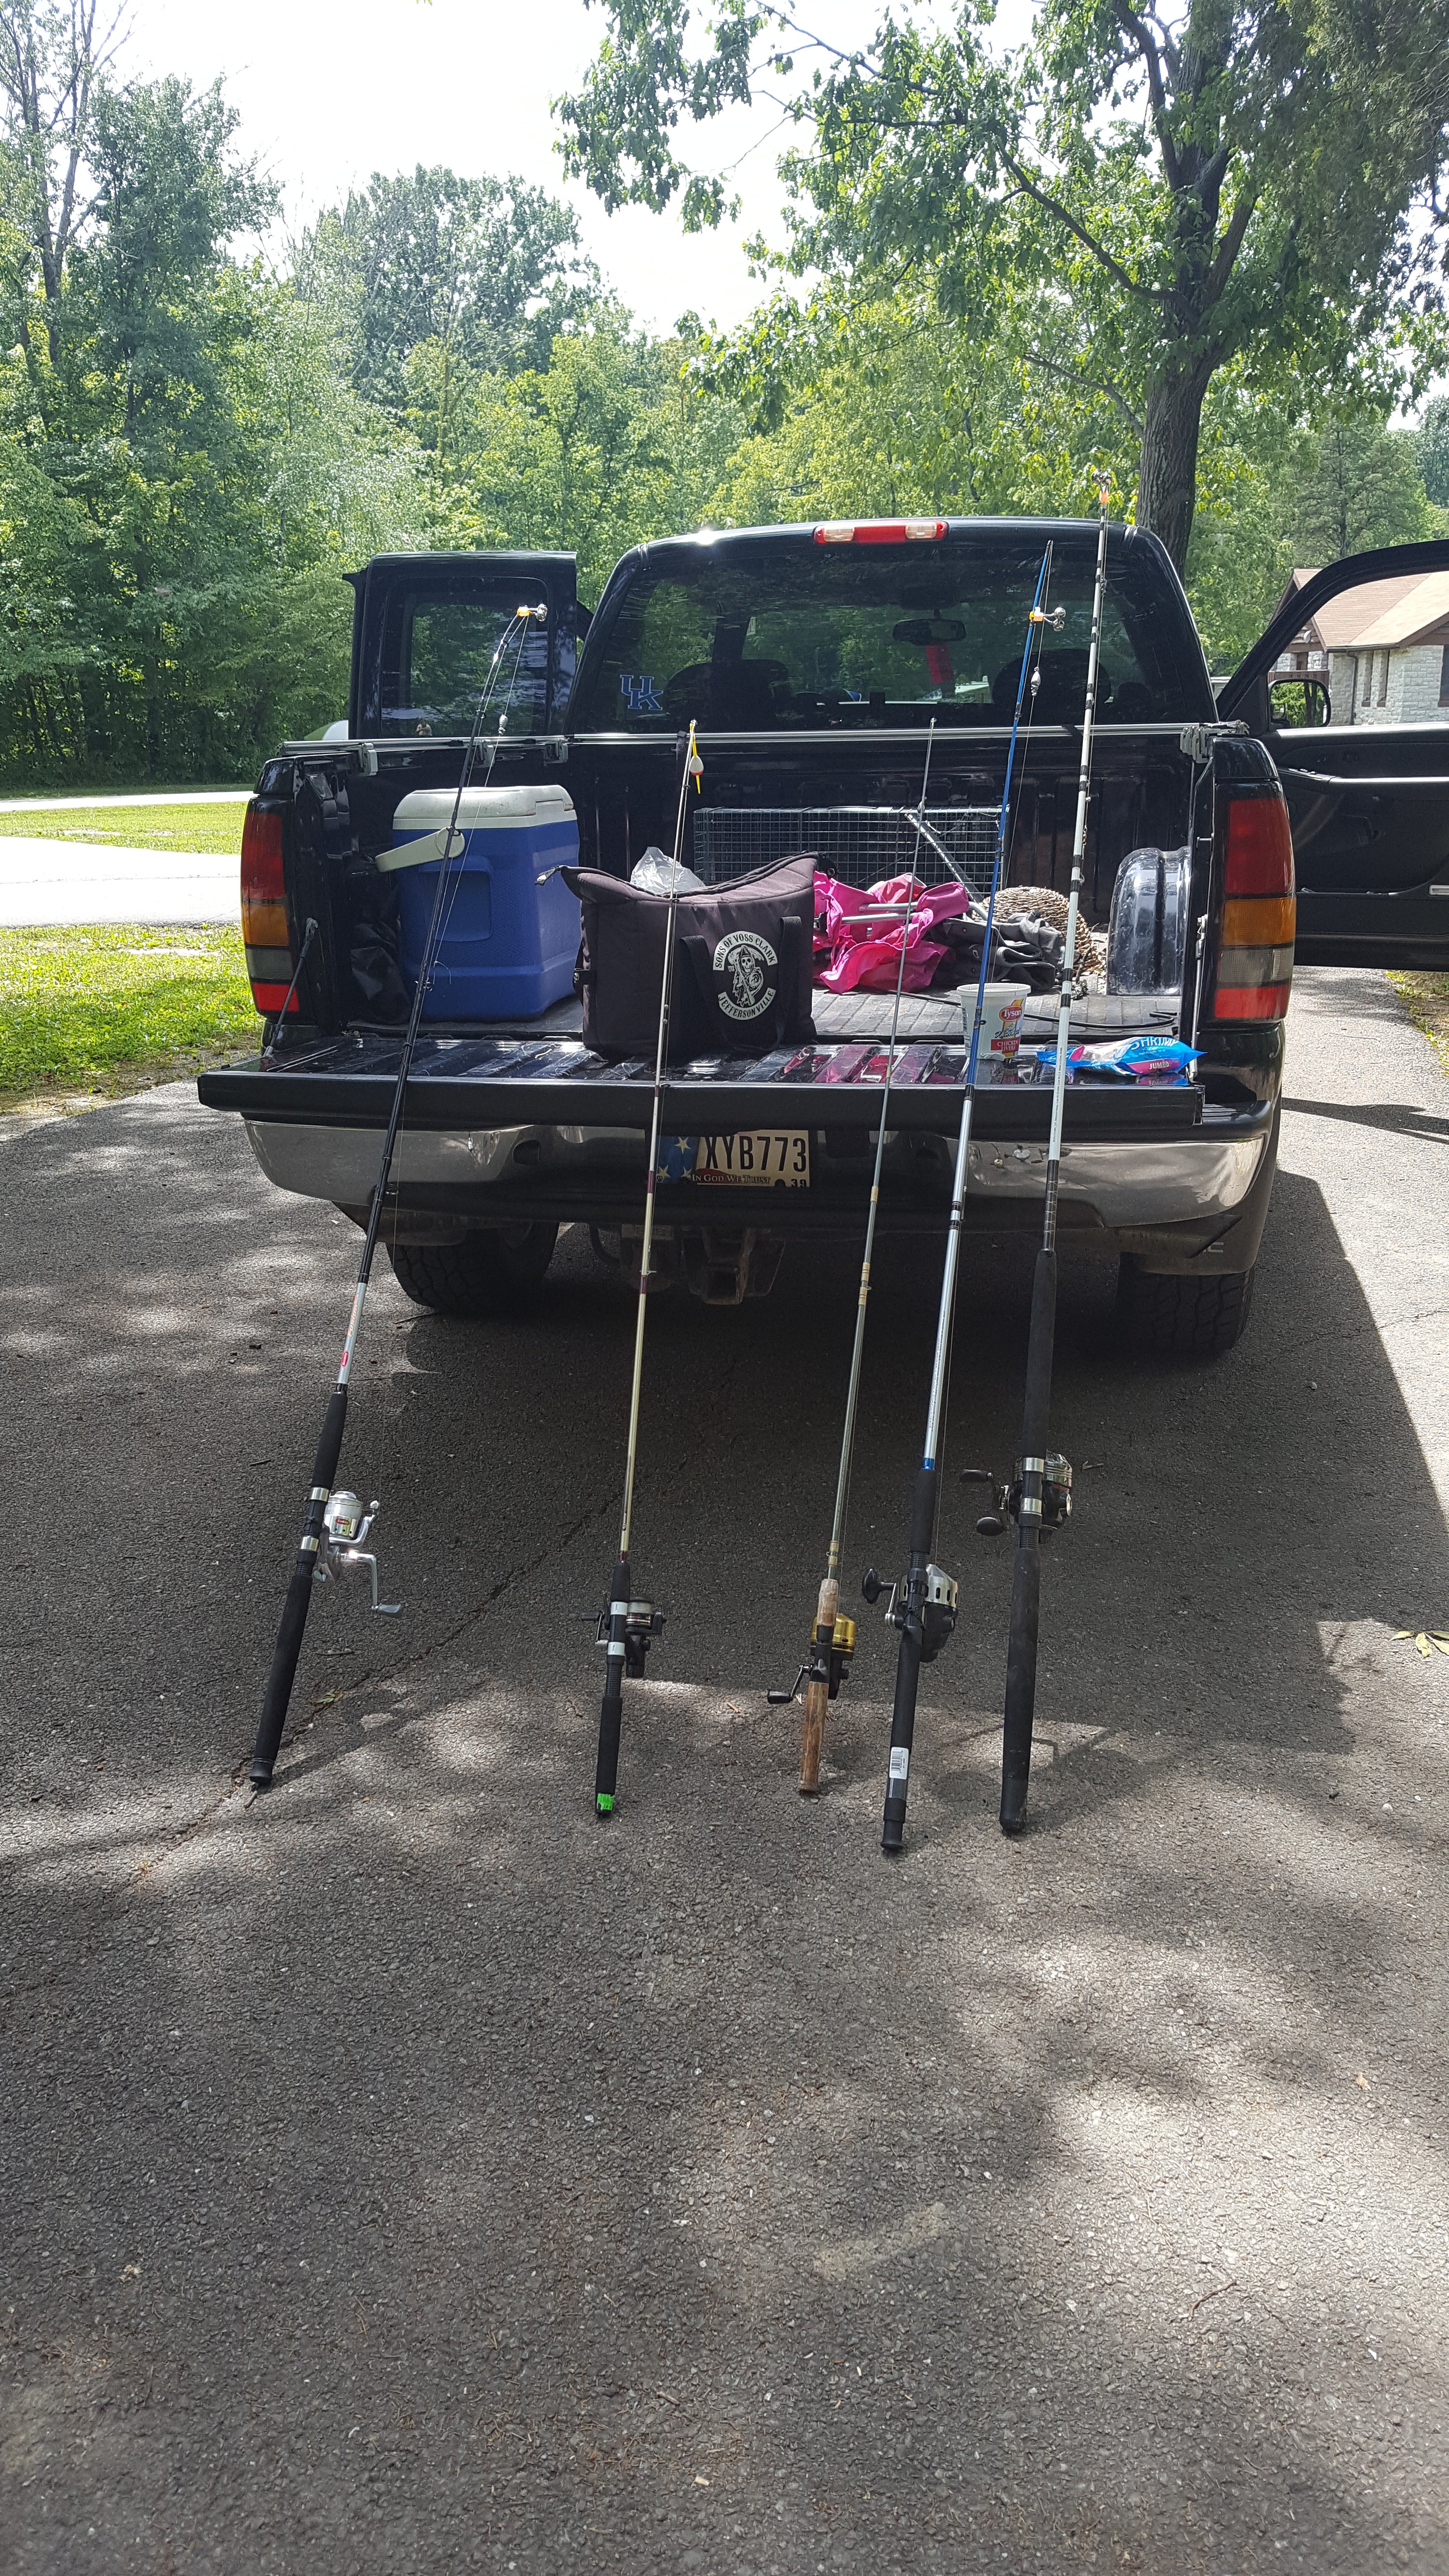 Ready to go fishing